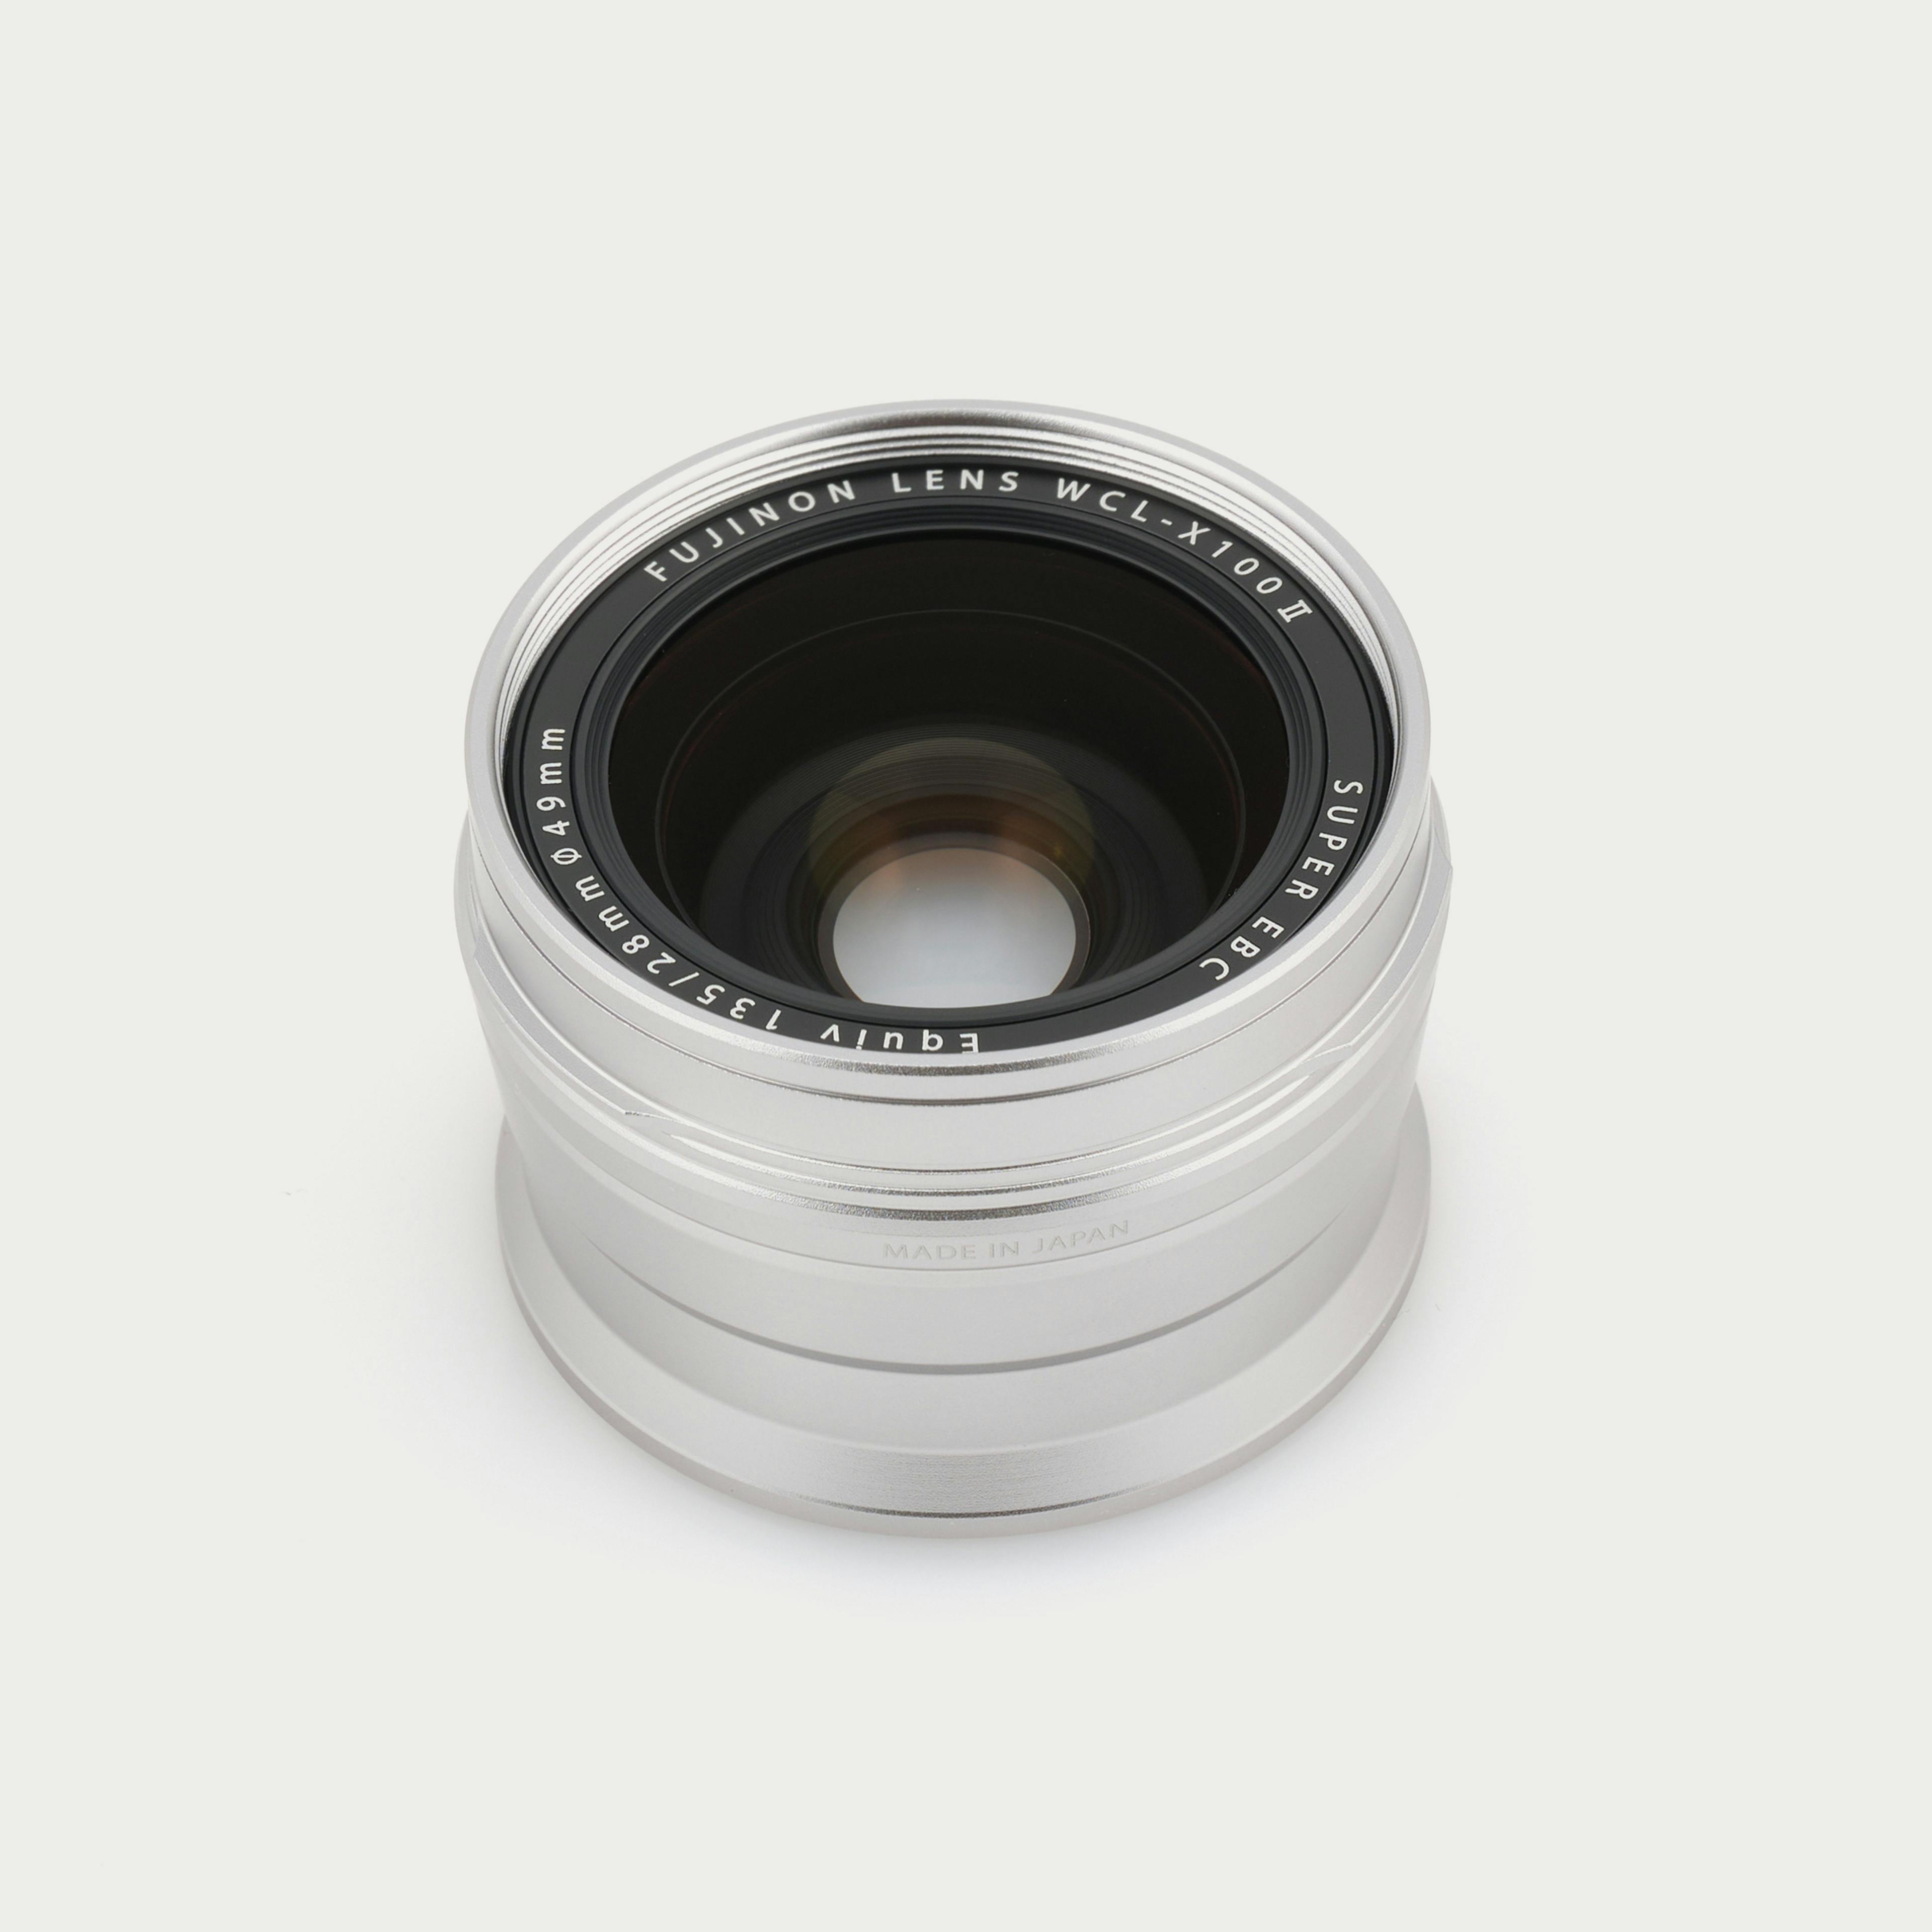 WCL-X100 II Wide Conversion Lens - Black